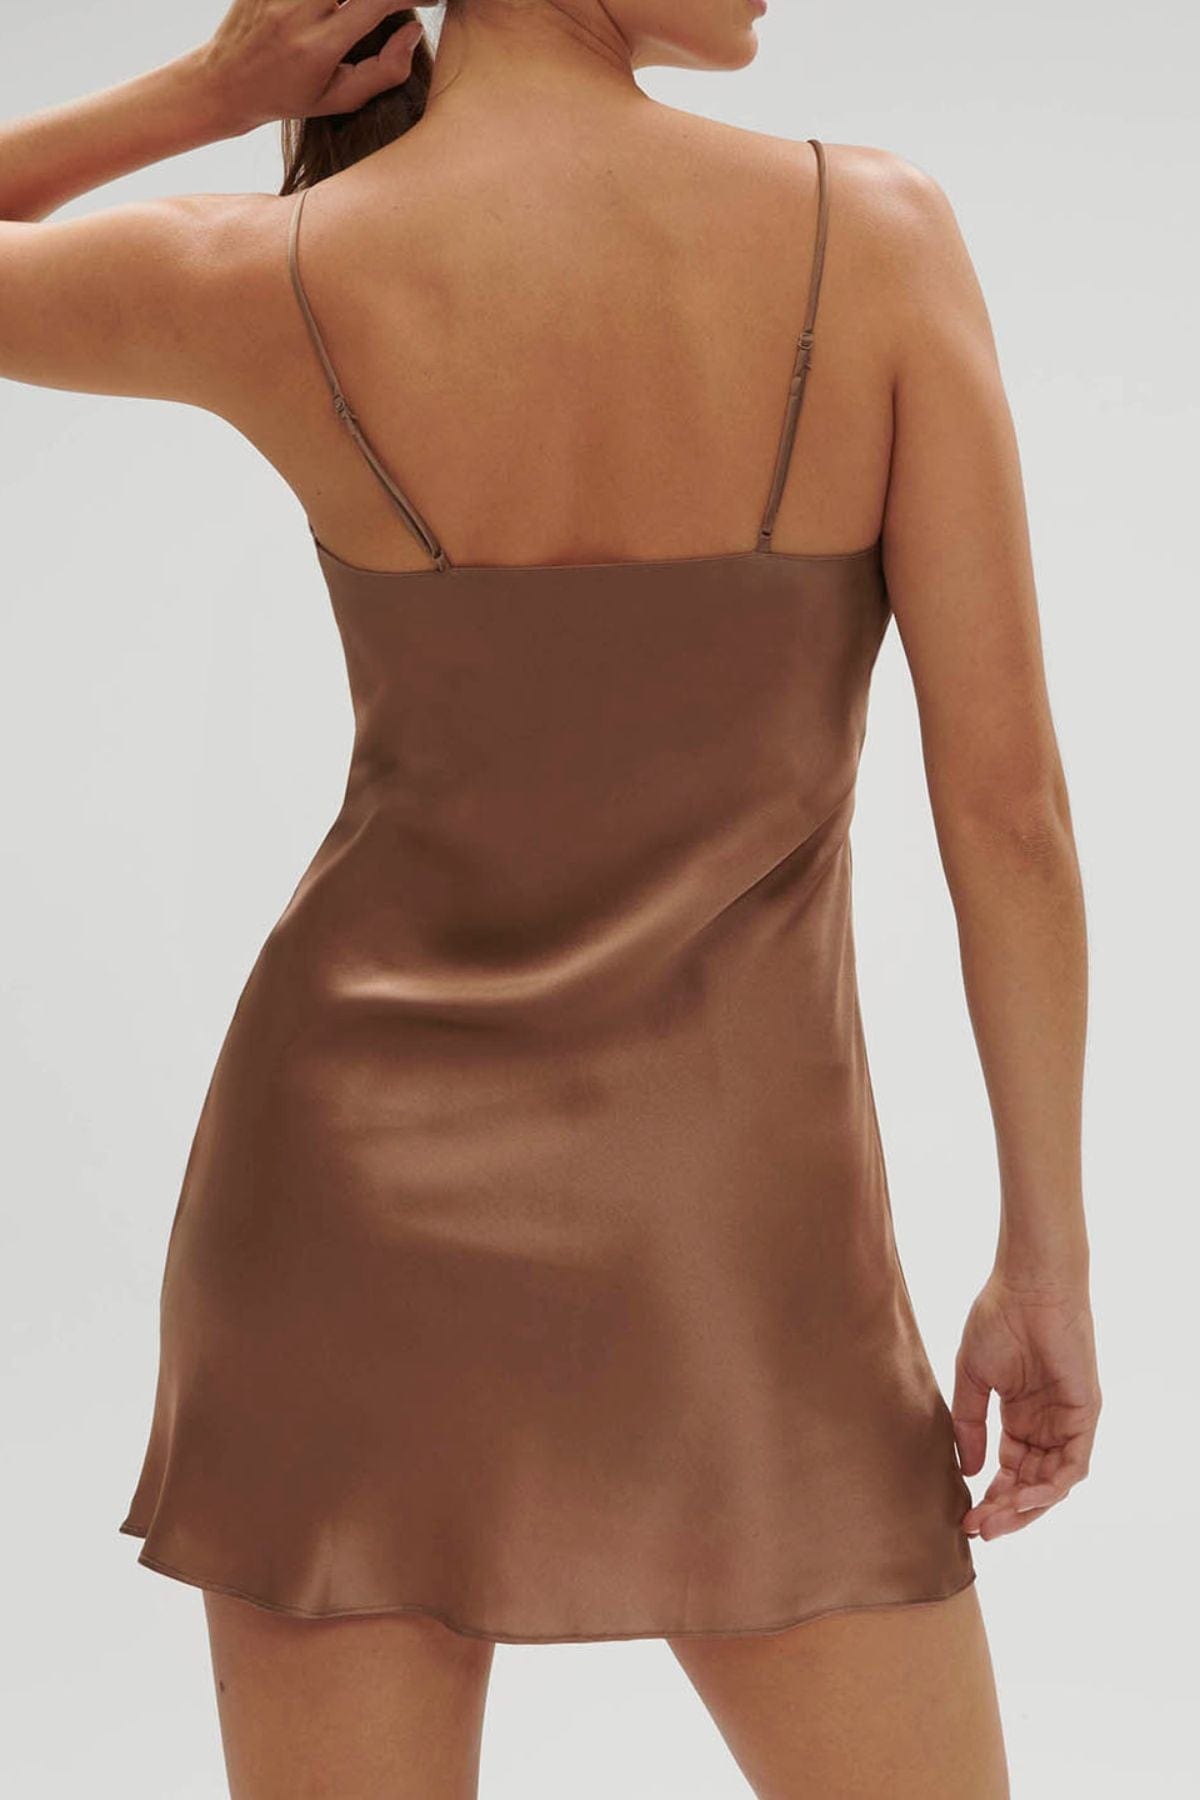 Simone Perele Chemise Dream Silk Dress - Light Brown